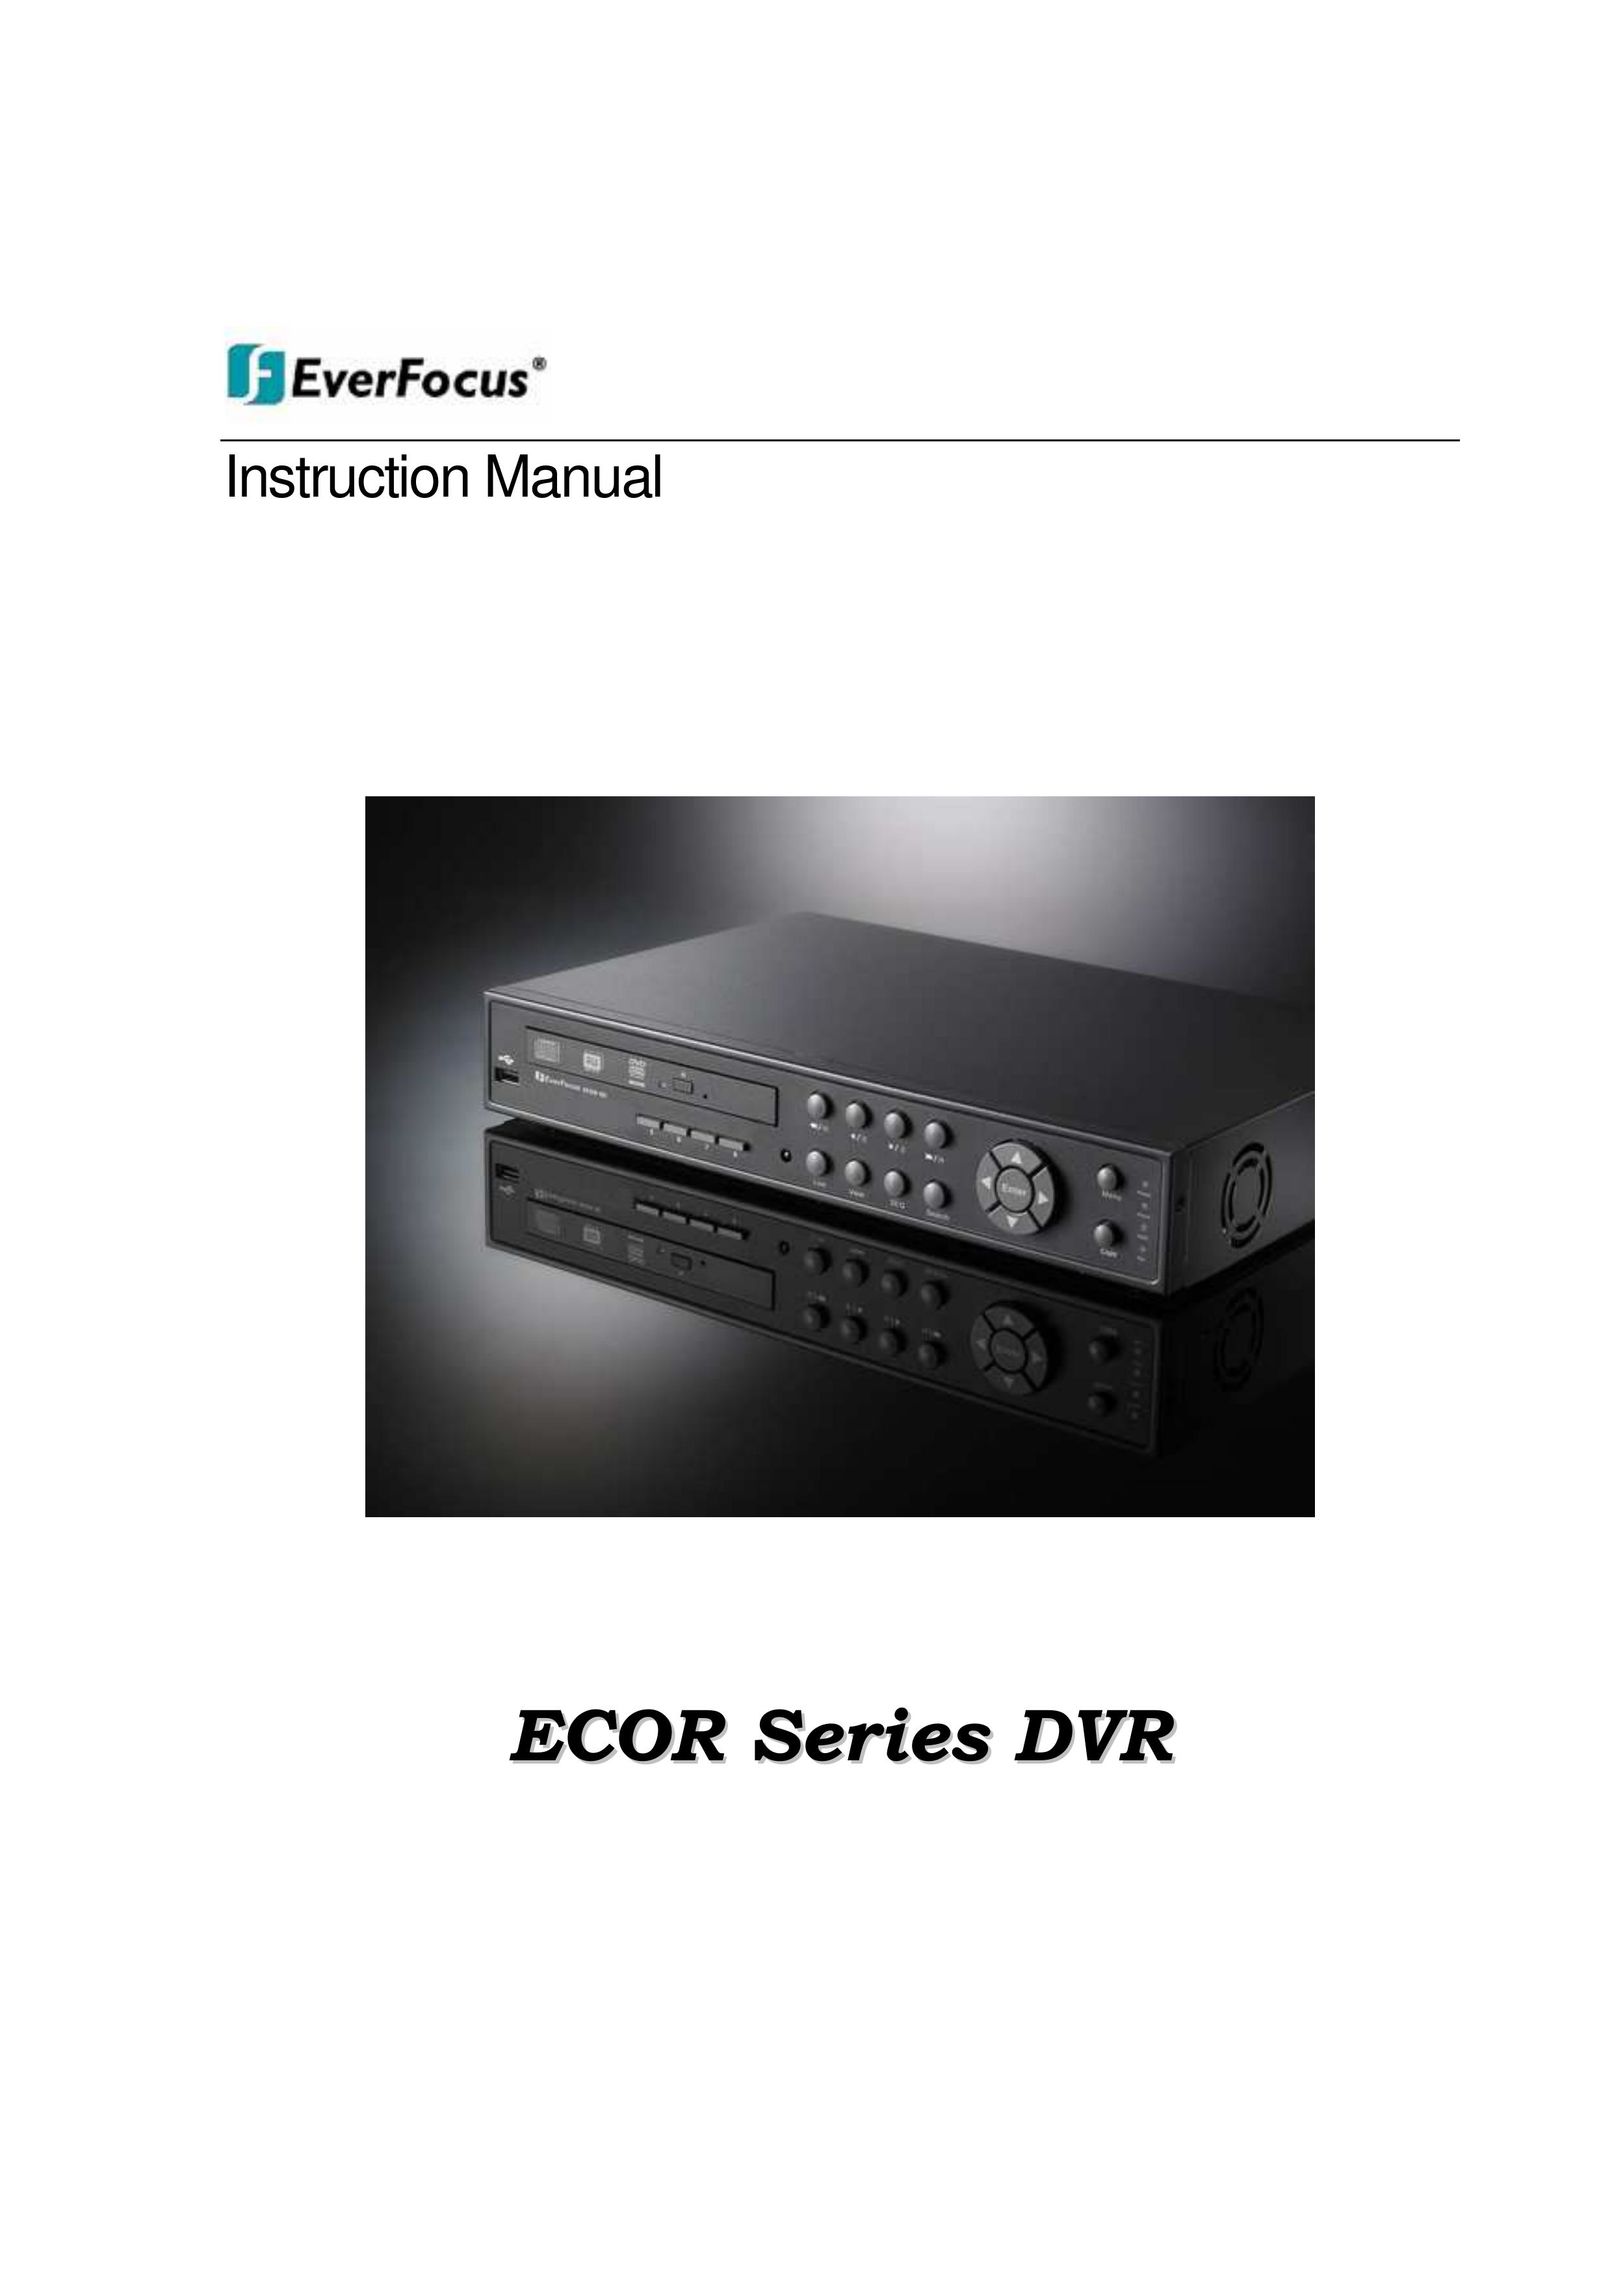 EverFocus EDR 410 DVR User Manual